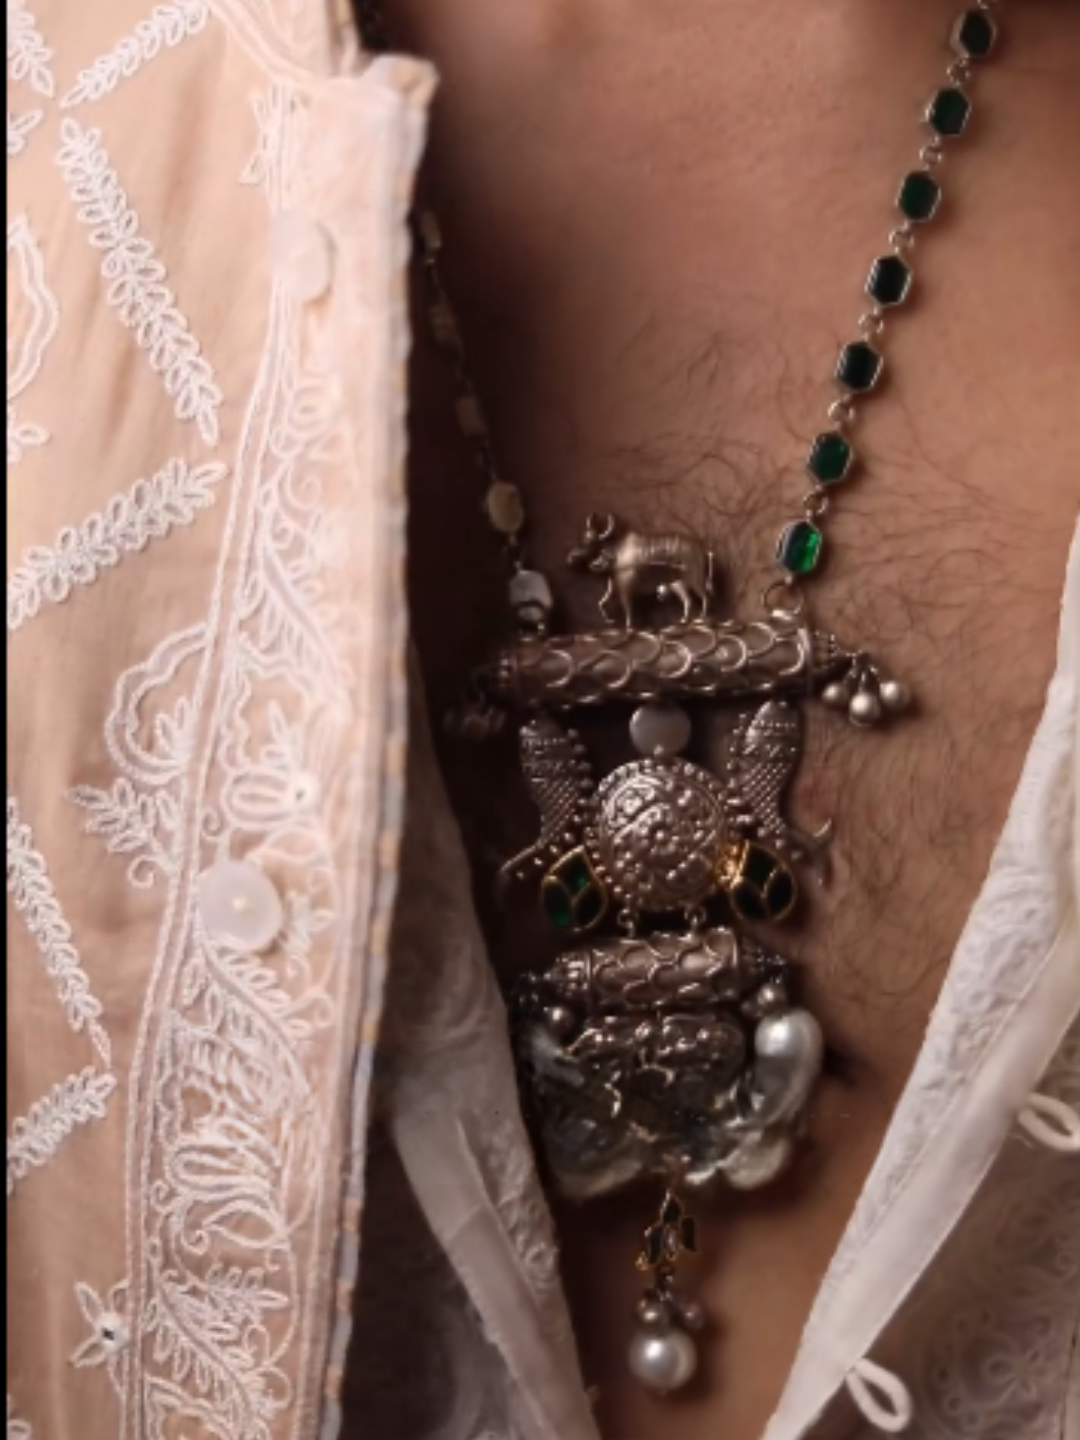 ishhaara-ankush-bahuguna-in-oxidised-necklace-with-green-beads-58183706298890